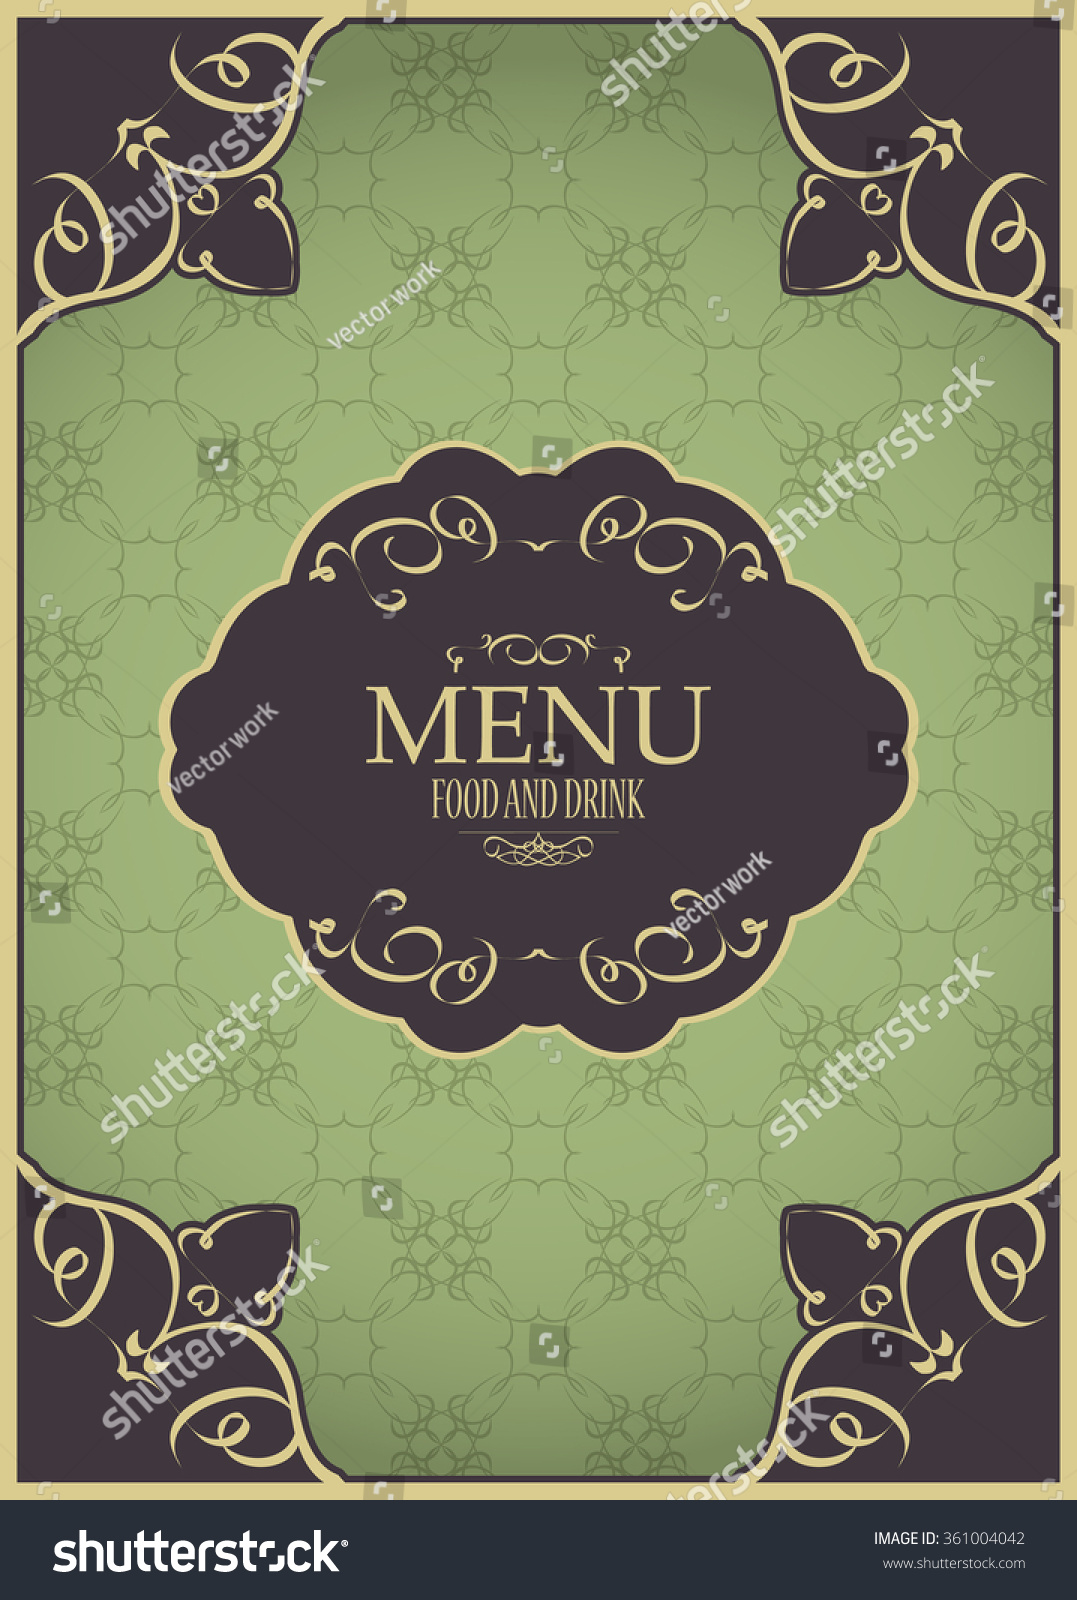 Patterned Vintage Restaurant Menu Label Retro Stock Vector Royalty Free 361004042 Shutterstock 